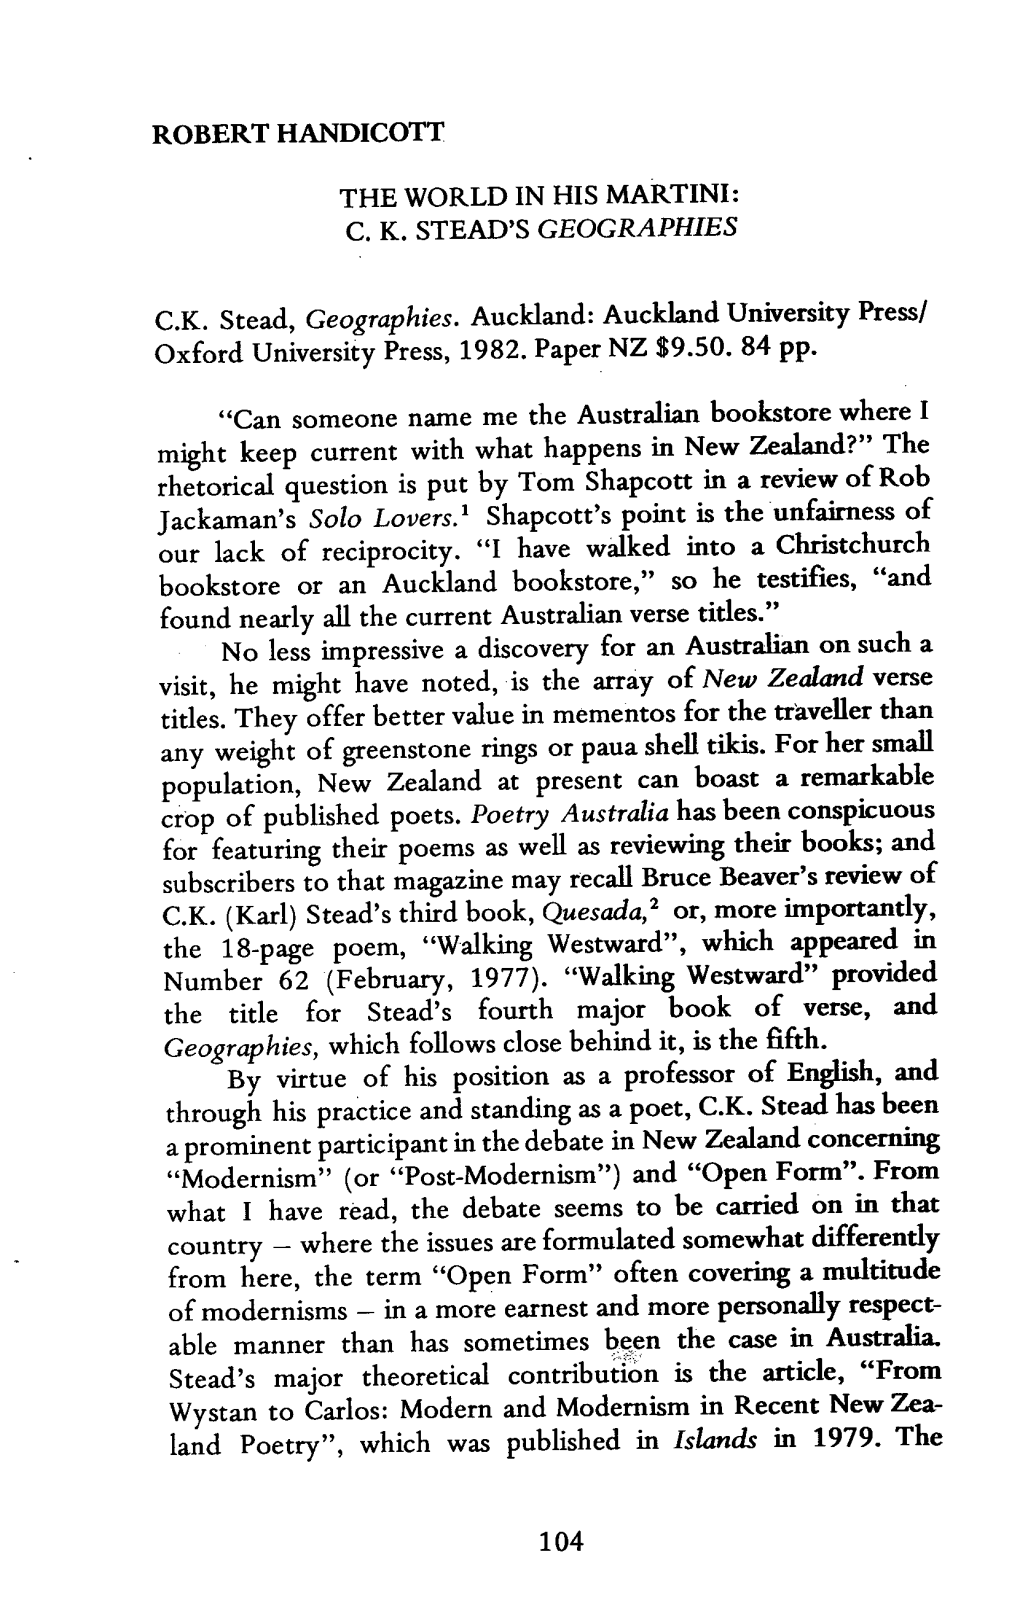 Auckland University Press! Oxford University Press, 1982